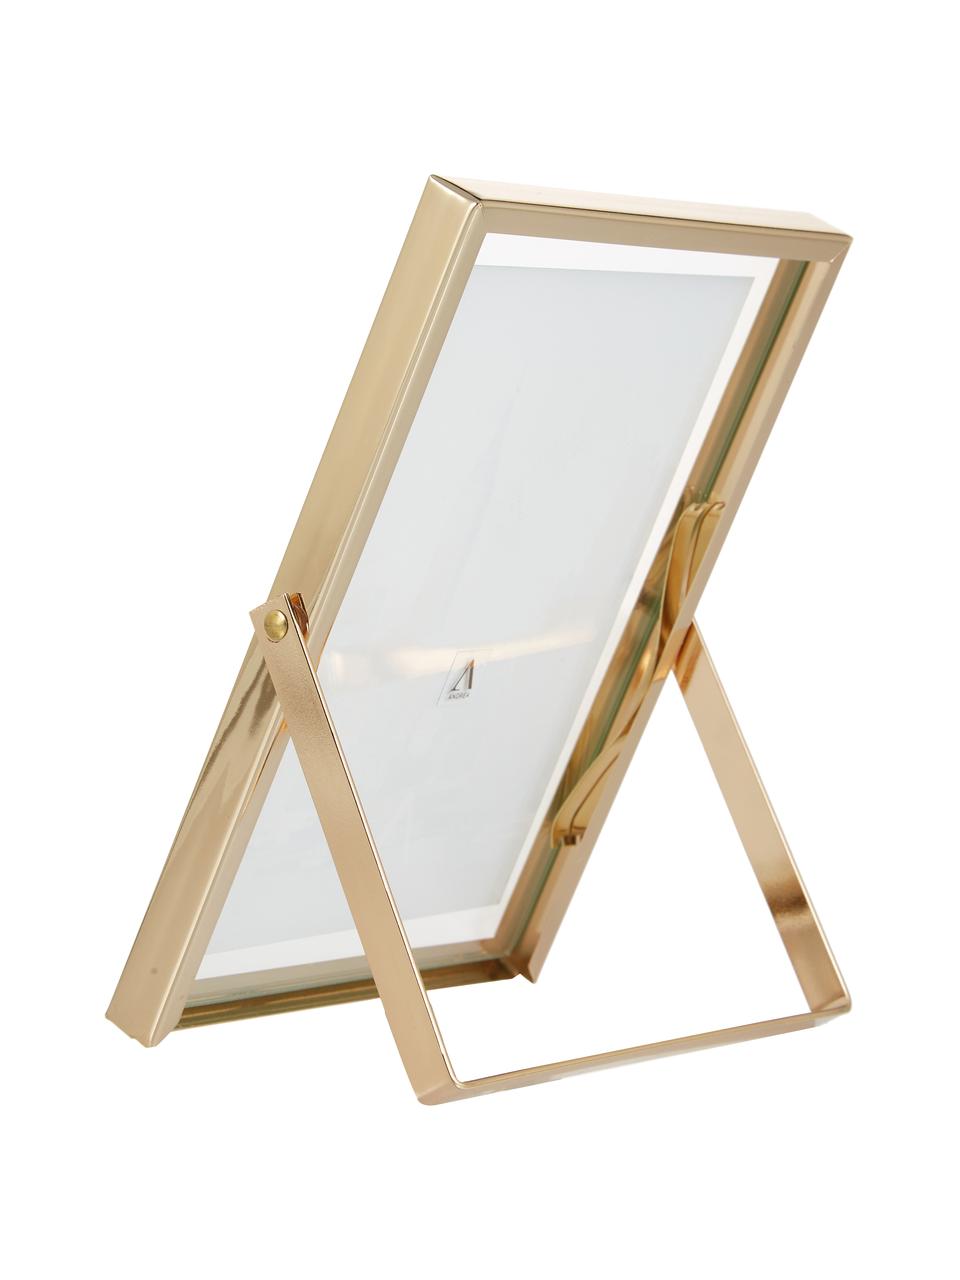 Bilderrahmen Marco, Rahmen: Metall, Front: Glas, Goldfarben, 13 x 18 cm